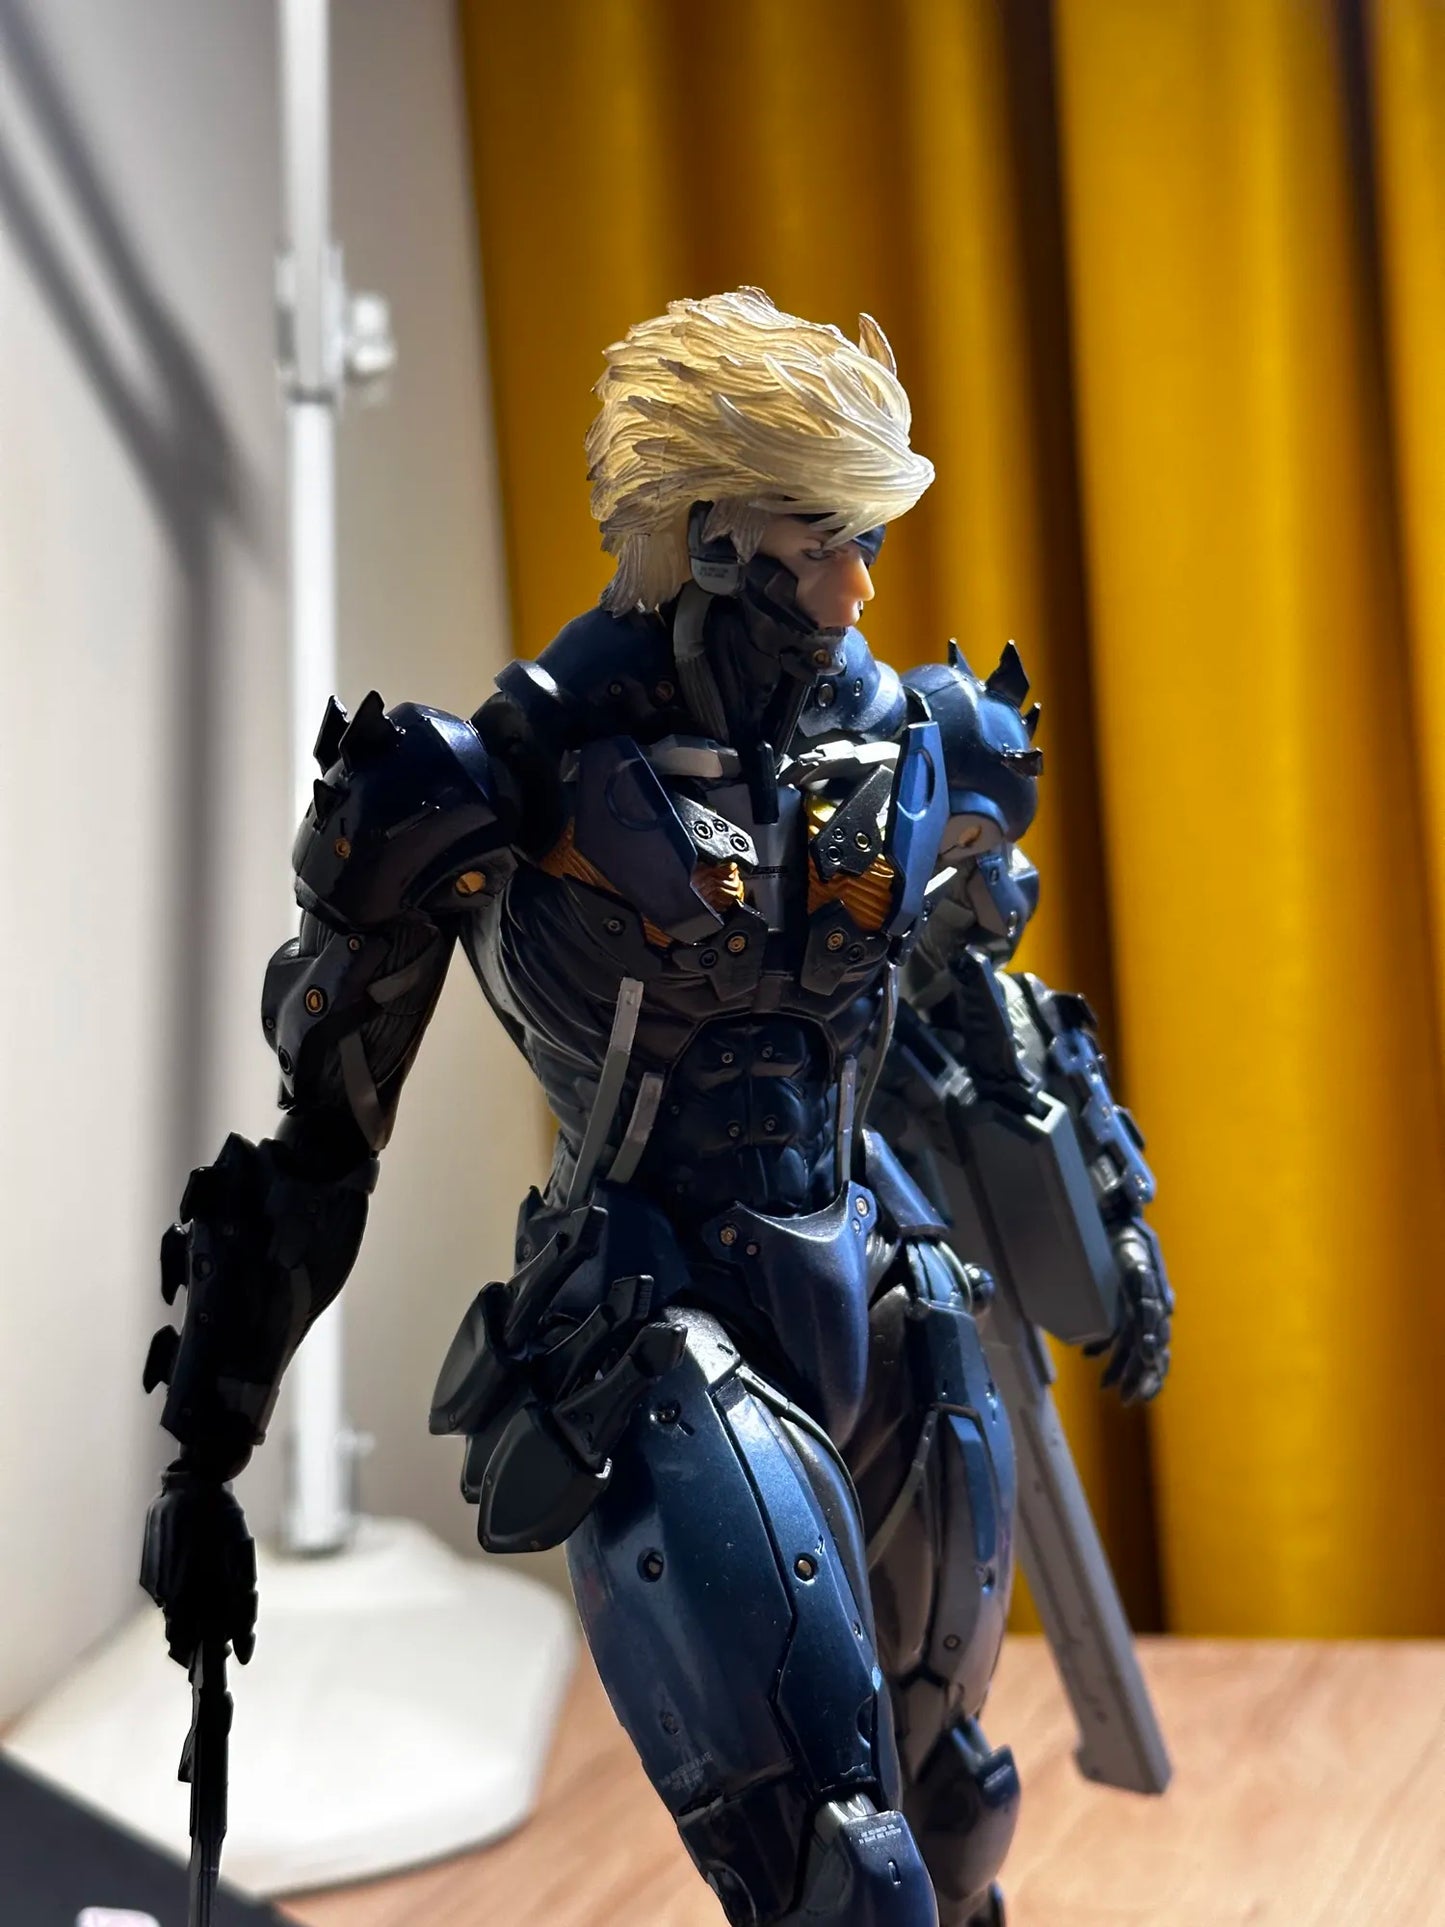 Raiden: Metal Gear Rising | Action Figure Play Arts Kai | Square Enix Original